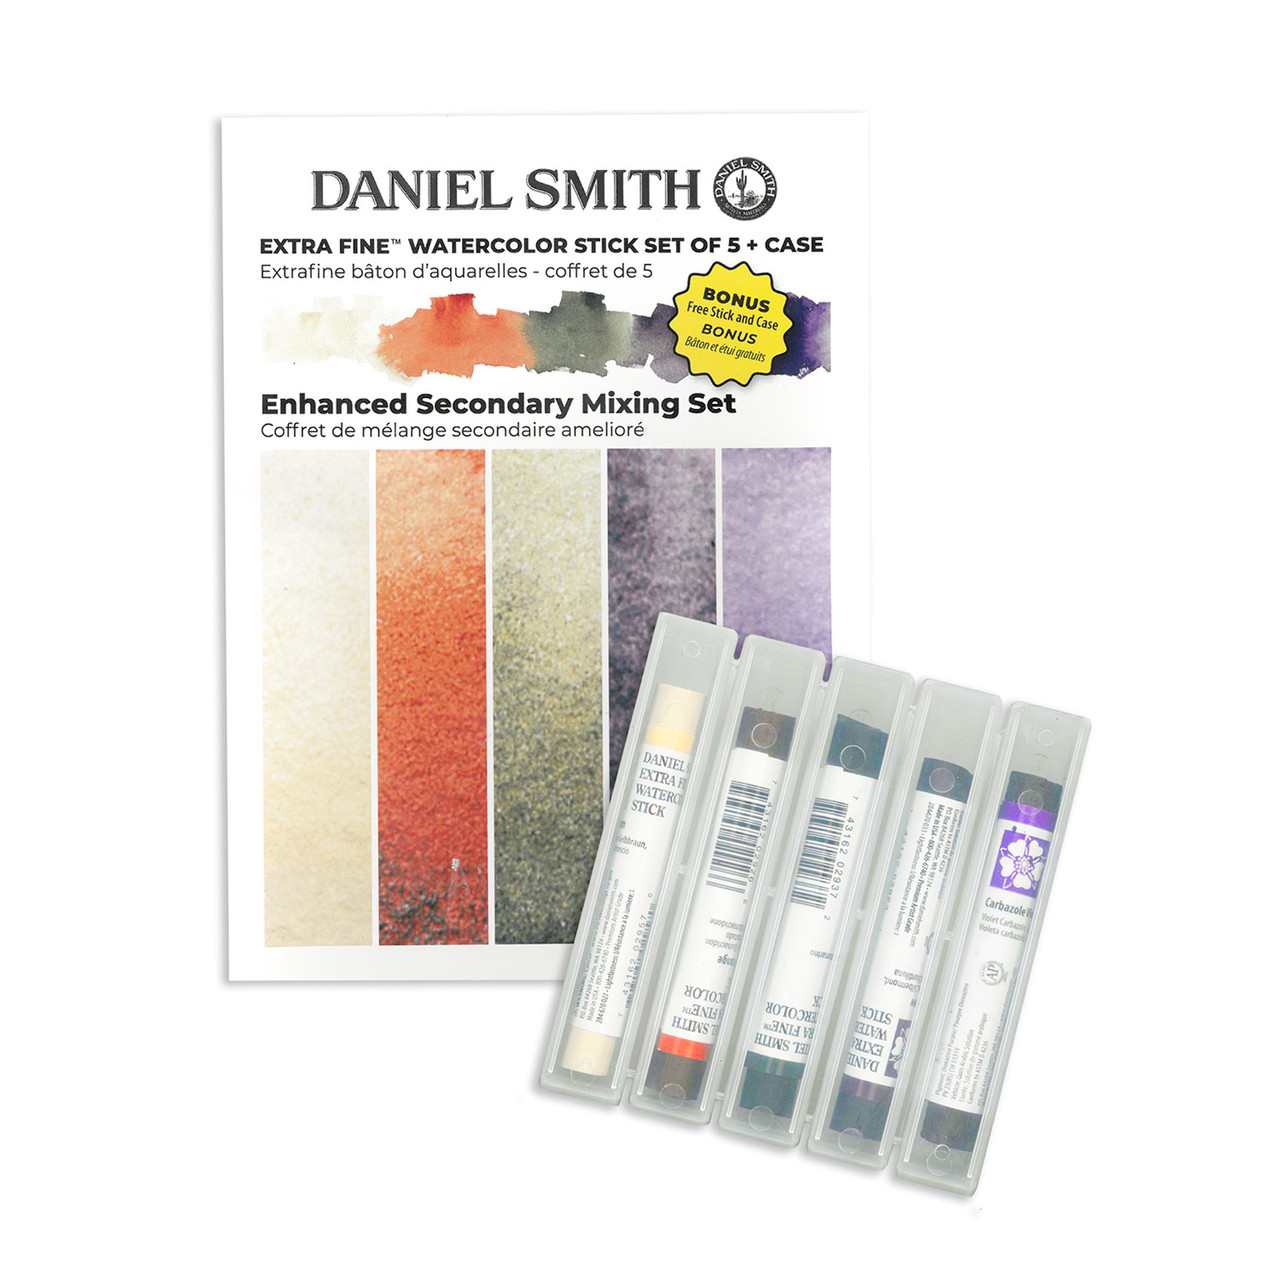 DANIEL SMITH Watercolor Sticks & Sets